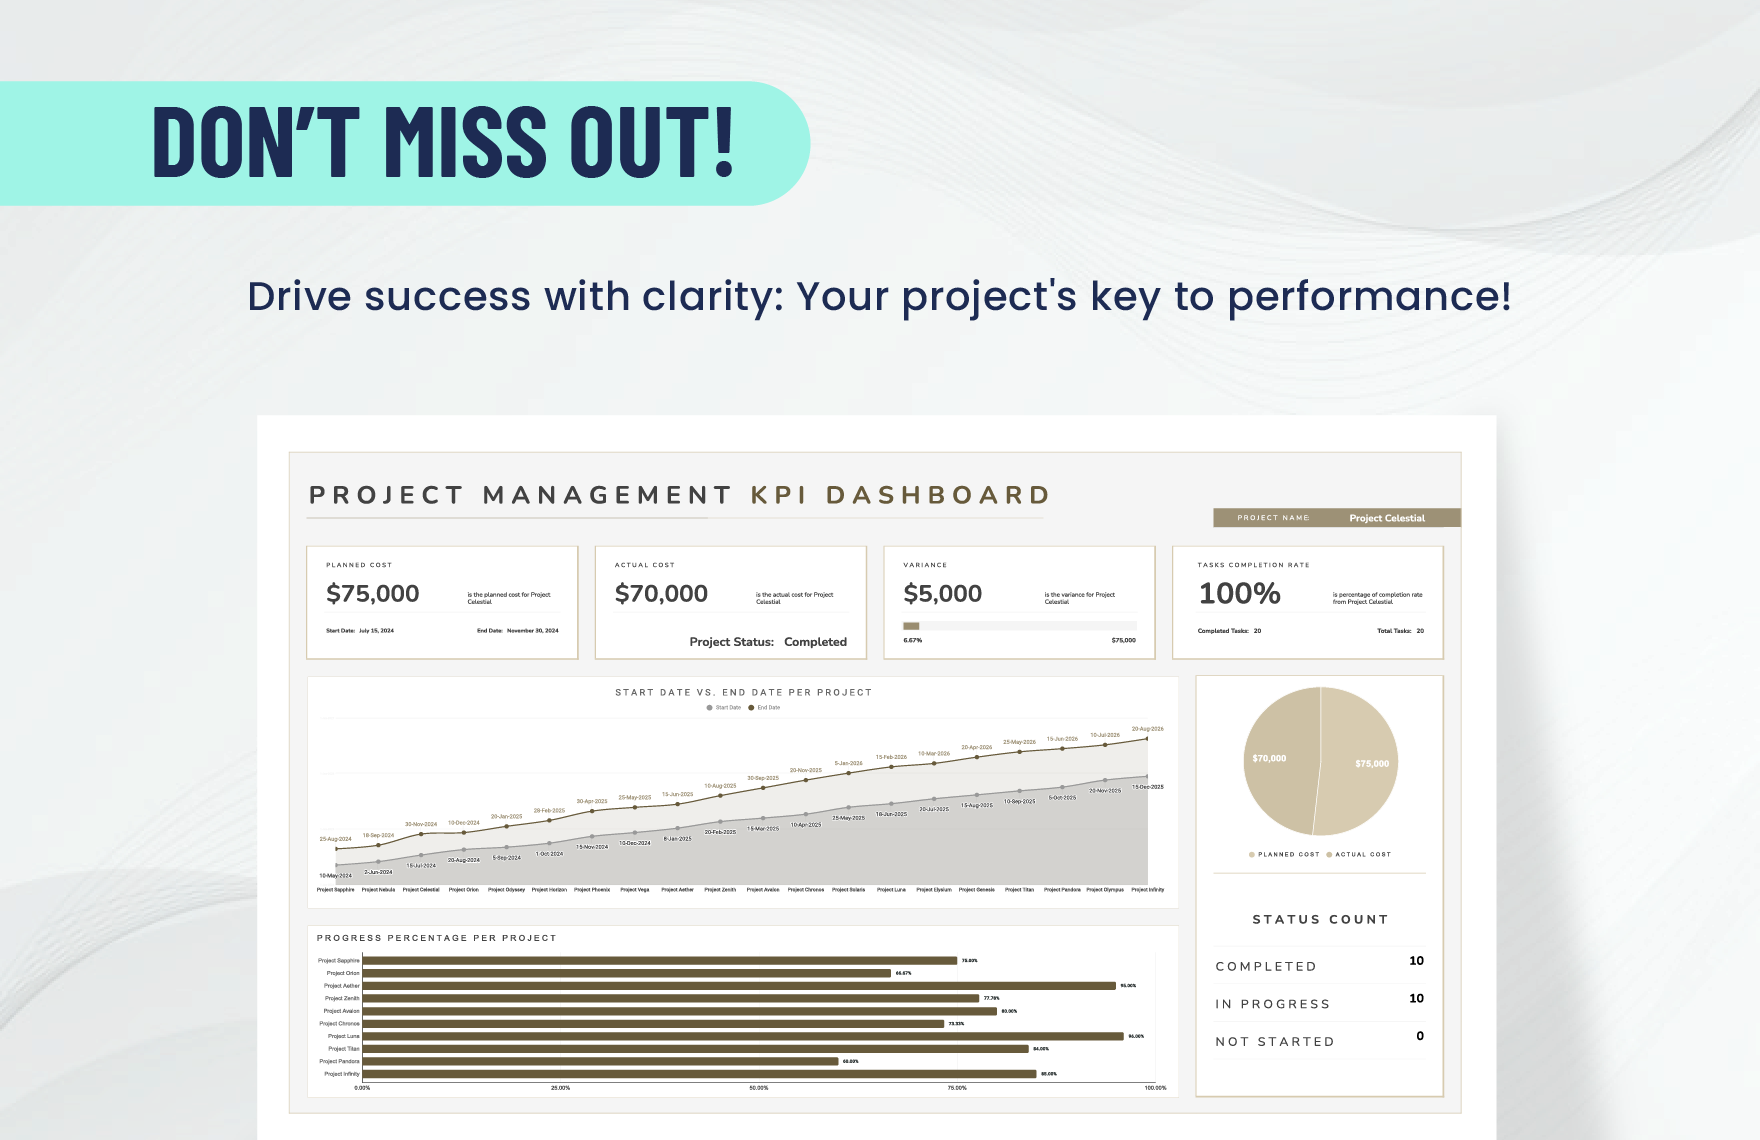 Project Management KPI Dashboard Template